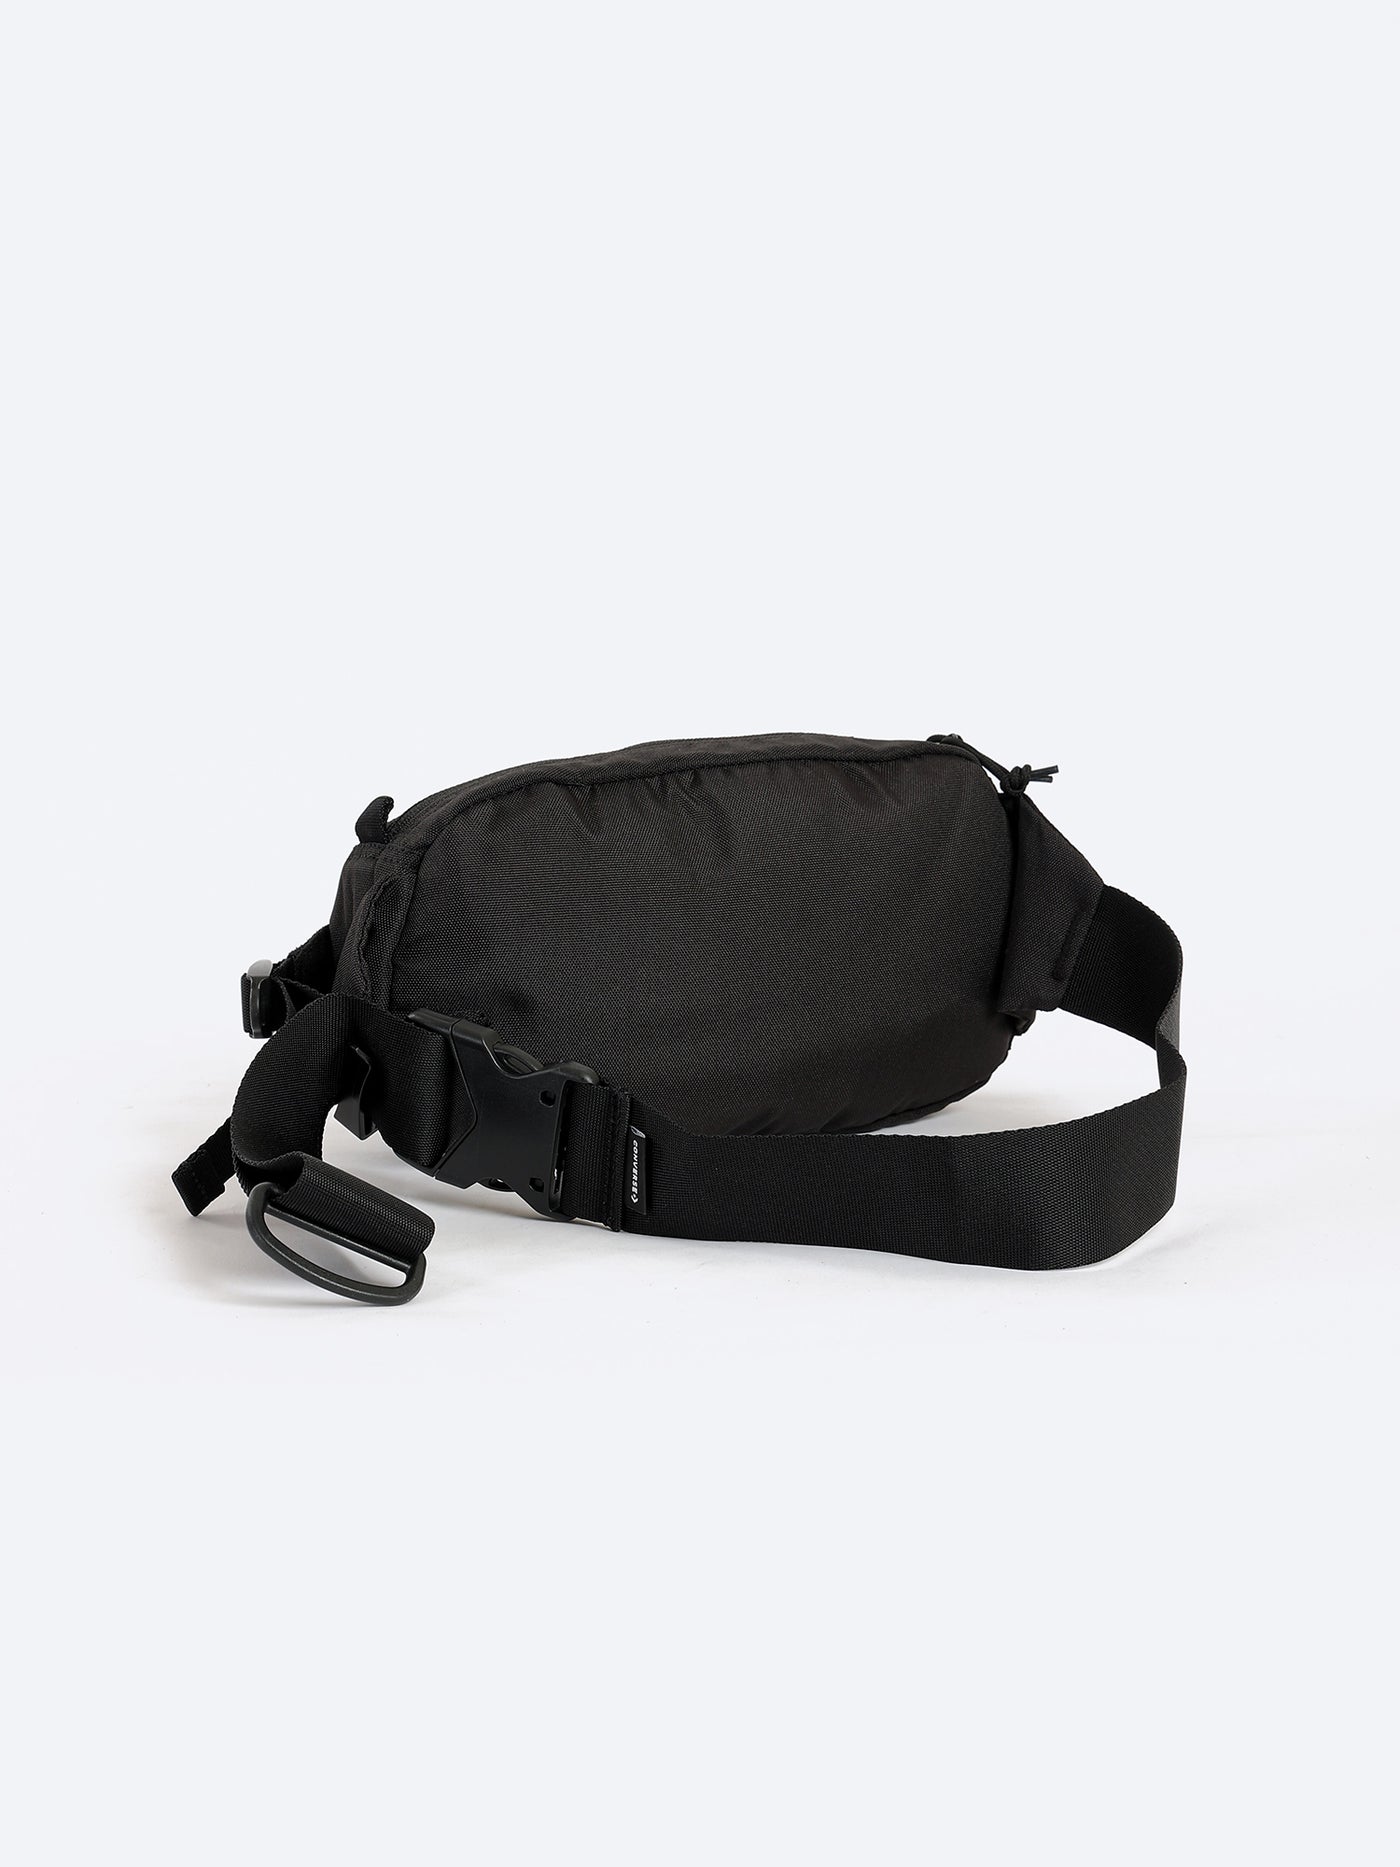 Unisex Waist Bag - Transition Sling